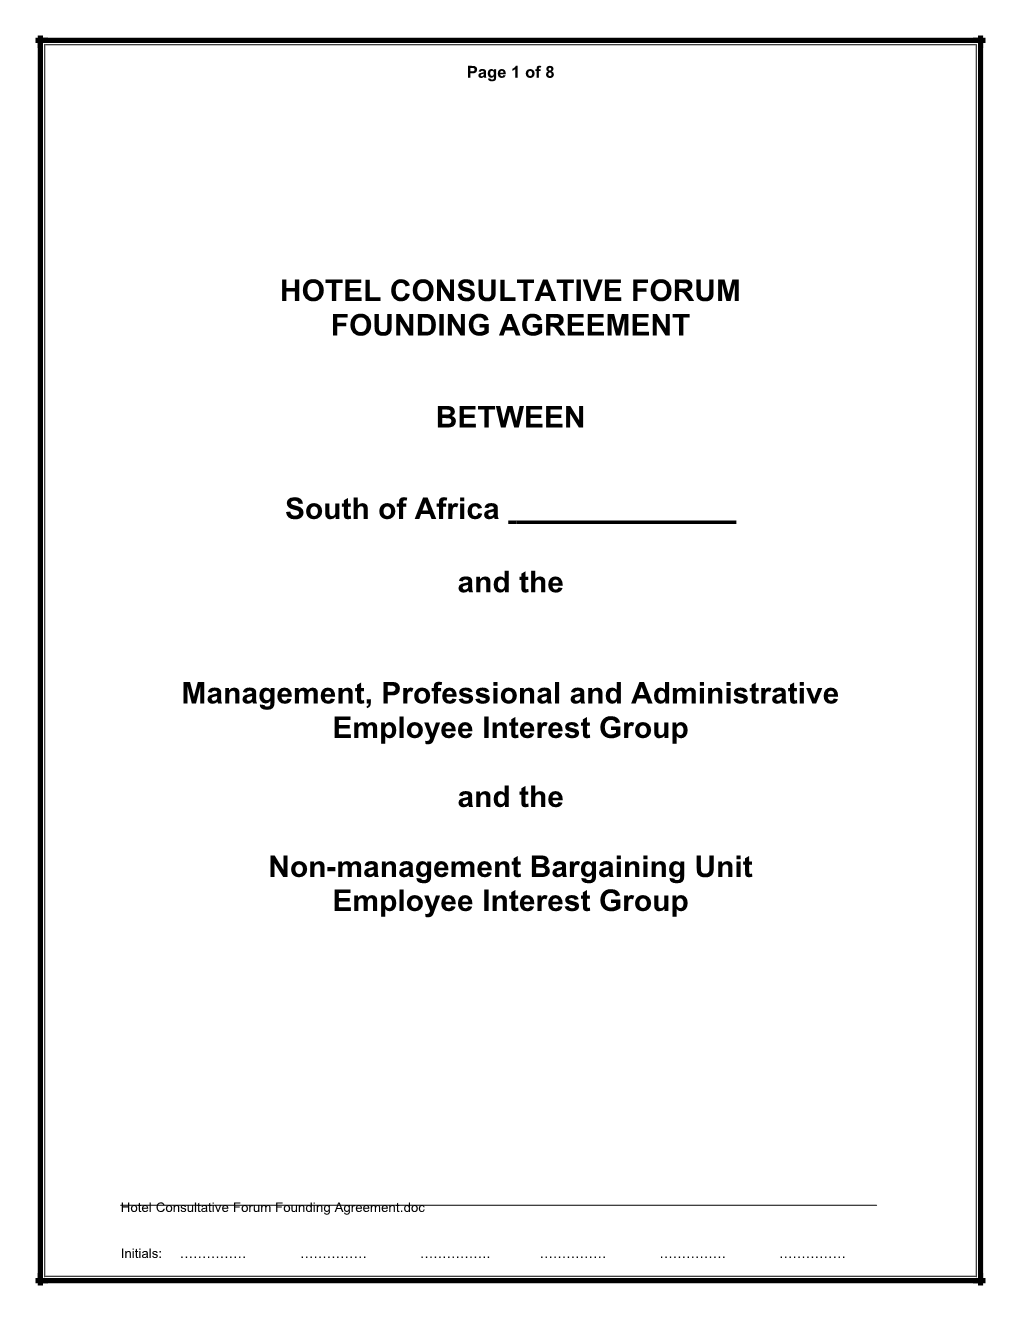 Hotel Consultative Forum Founding Agreement